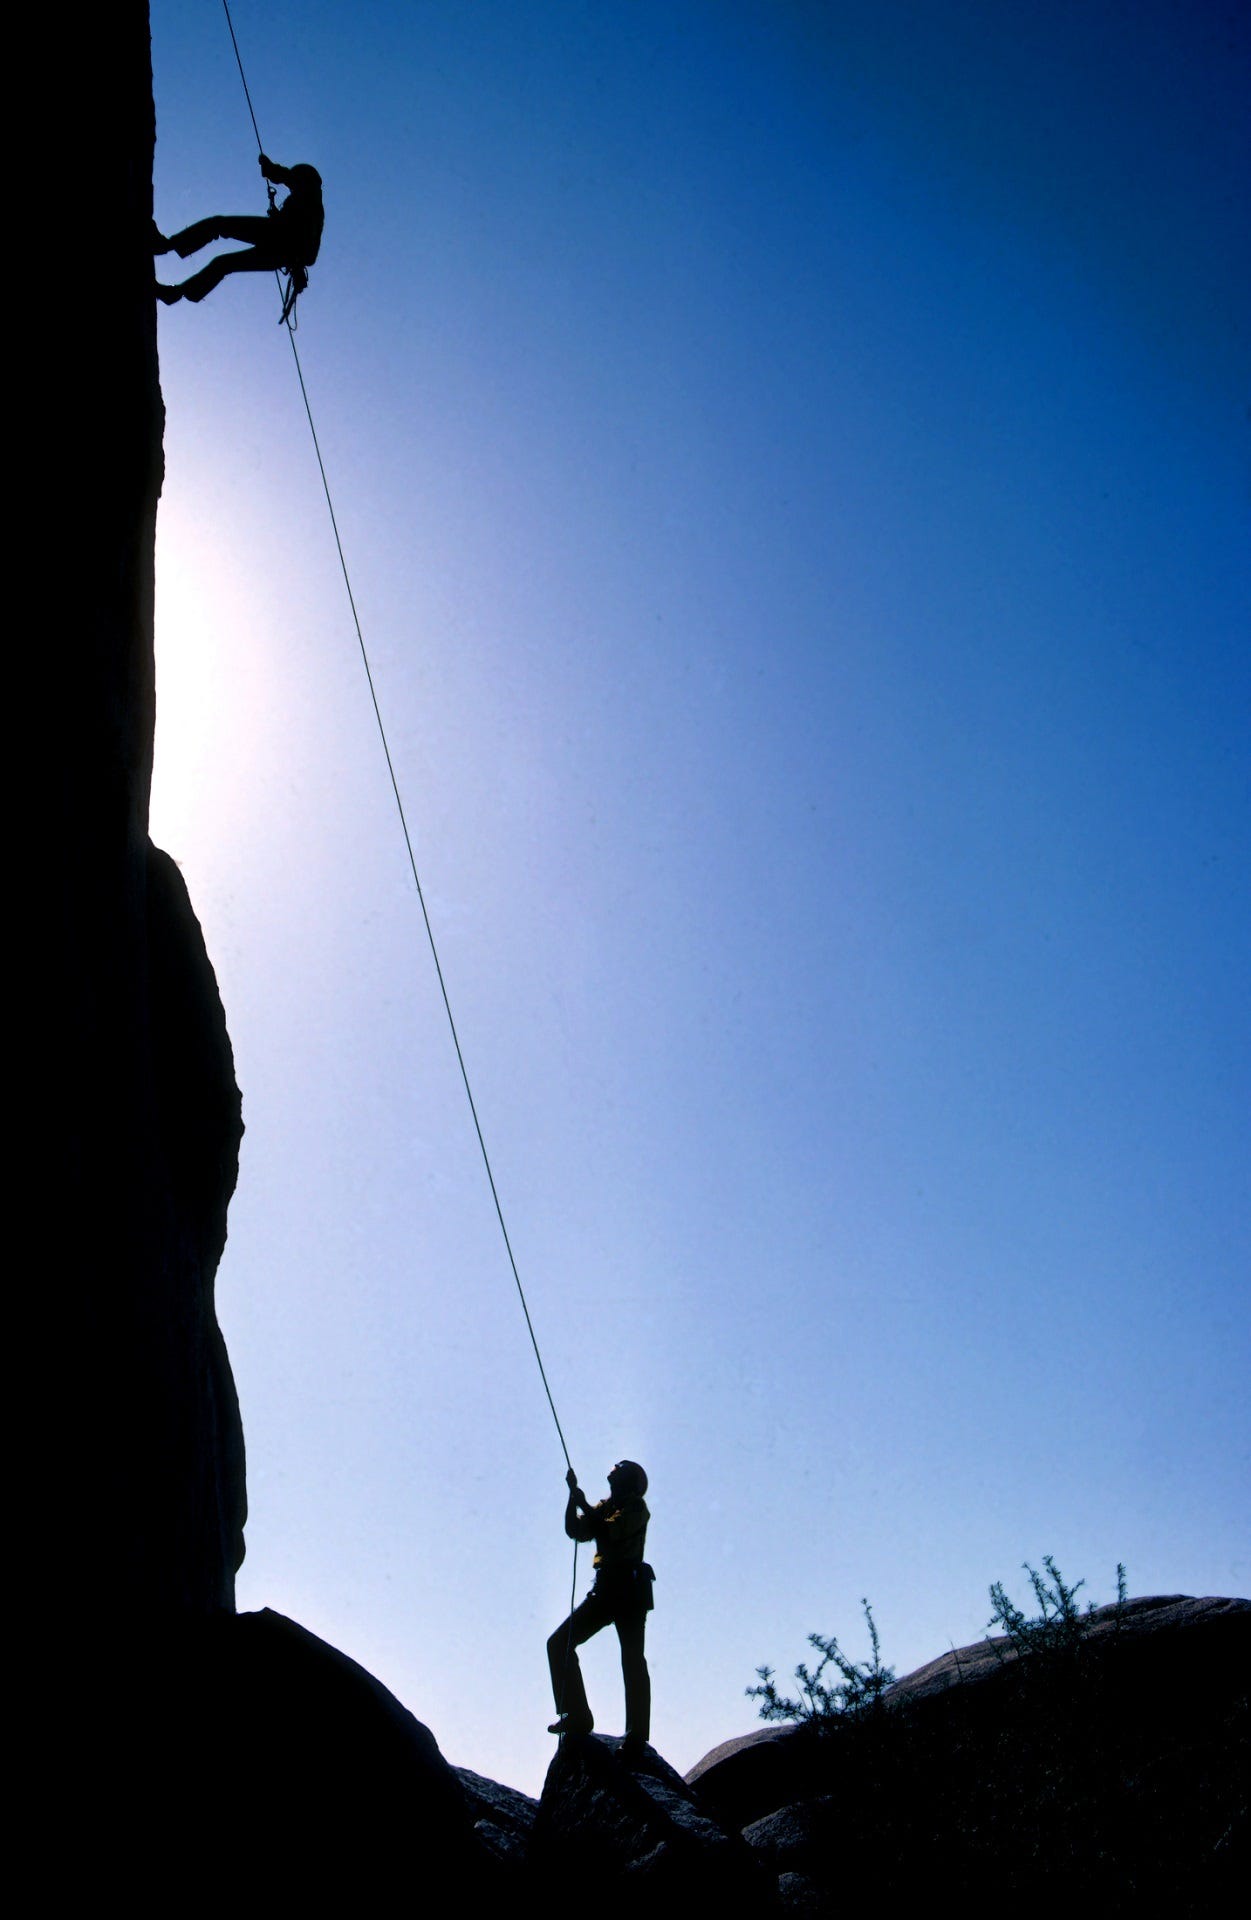 Rock Climbing: A Metaphor for Achieving your Goal